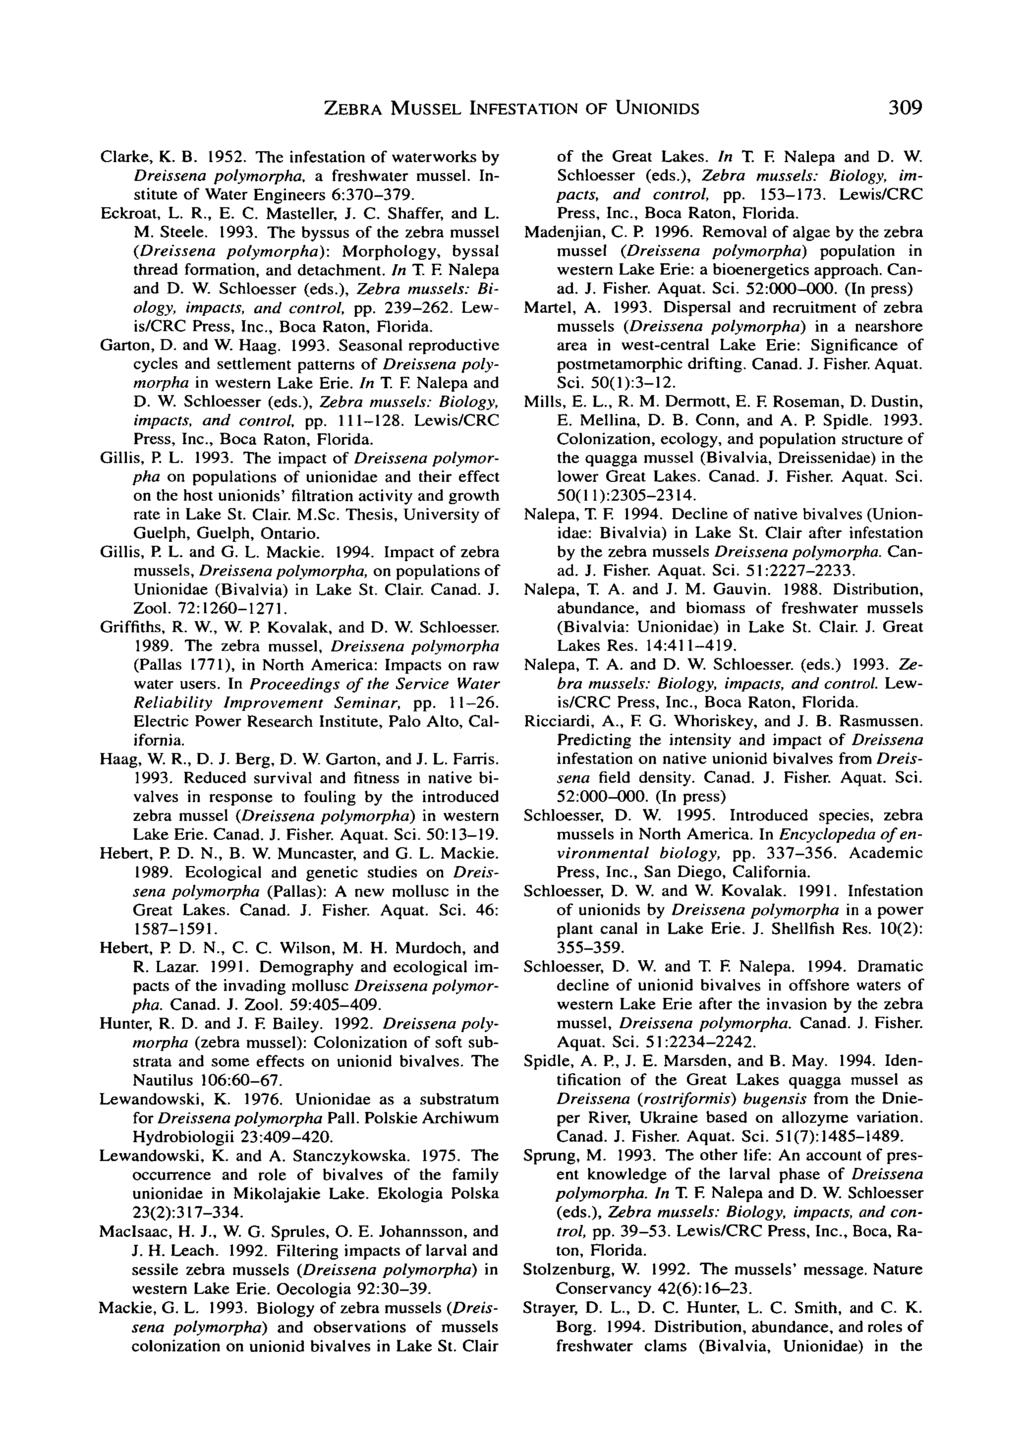 ZEBRA MUSSEL INFESTATION OF UNIONIDS 309 Clarke, K. B. 1952. The infestation of waterworks by Dreissena polymorpha, a freshwater mussel. Institute of Water Engineers 6:370-379. Eckroat, L. R., E. C. Masteller, J.